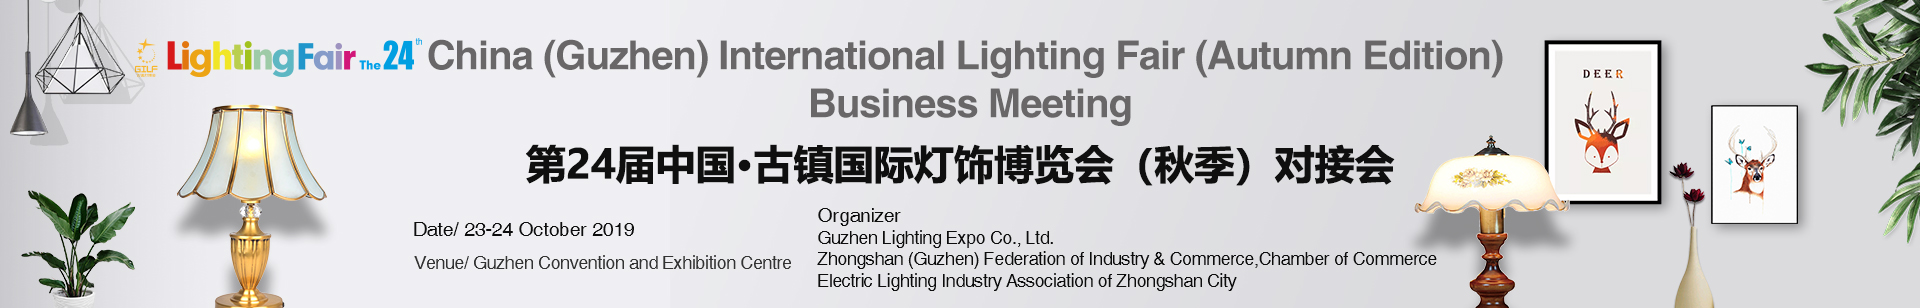 China (Guzhen) International Lighting Fair Business Meeting